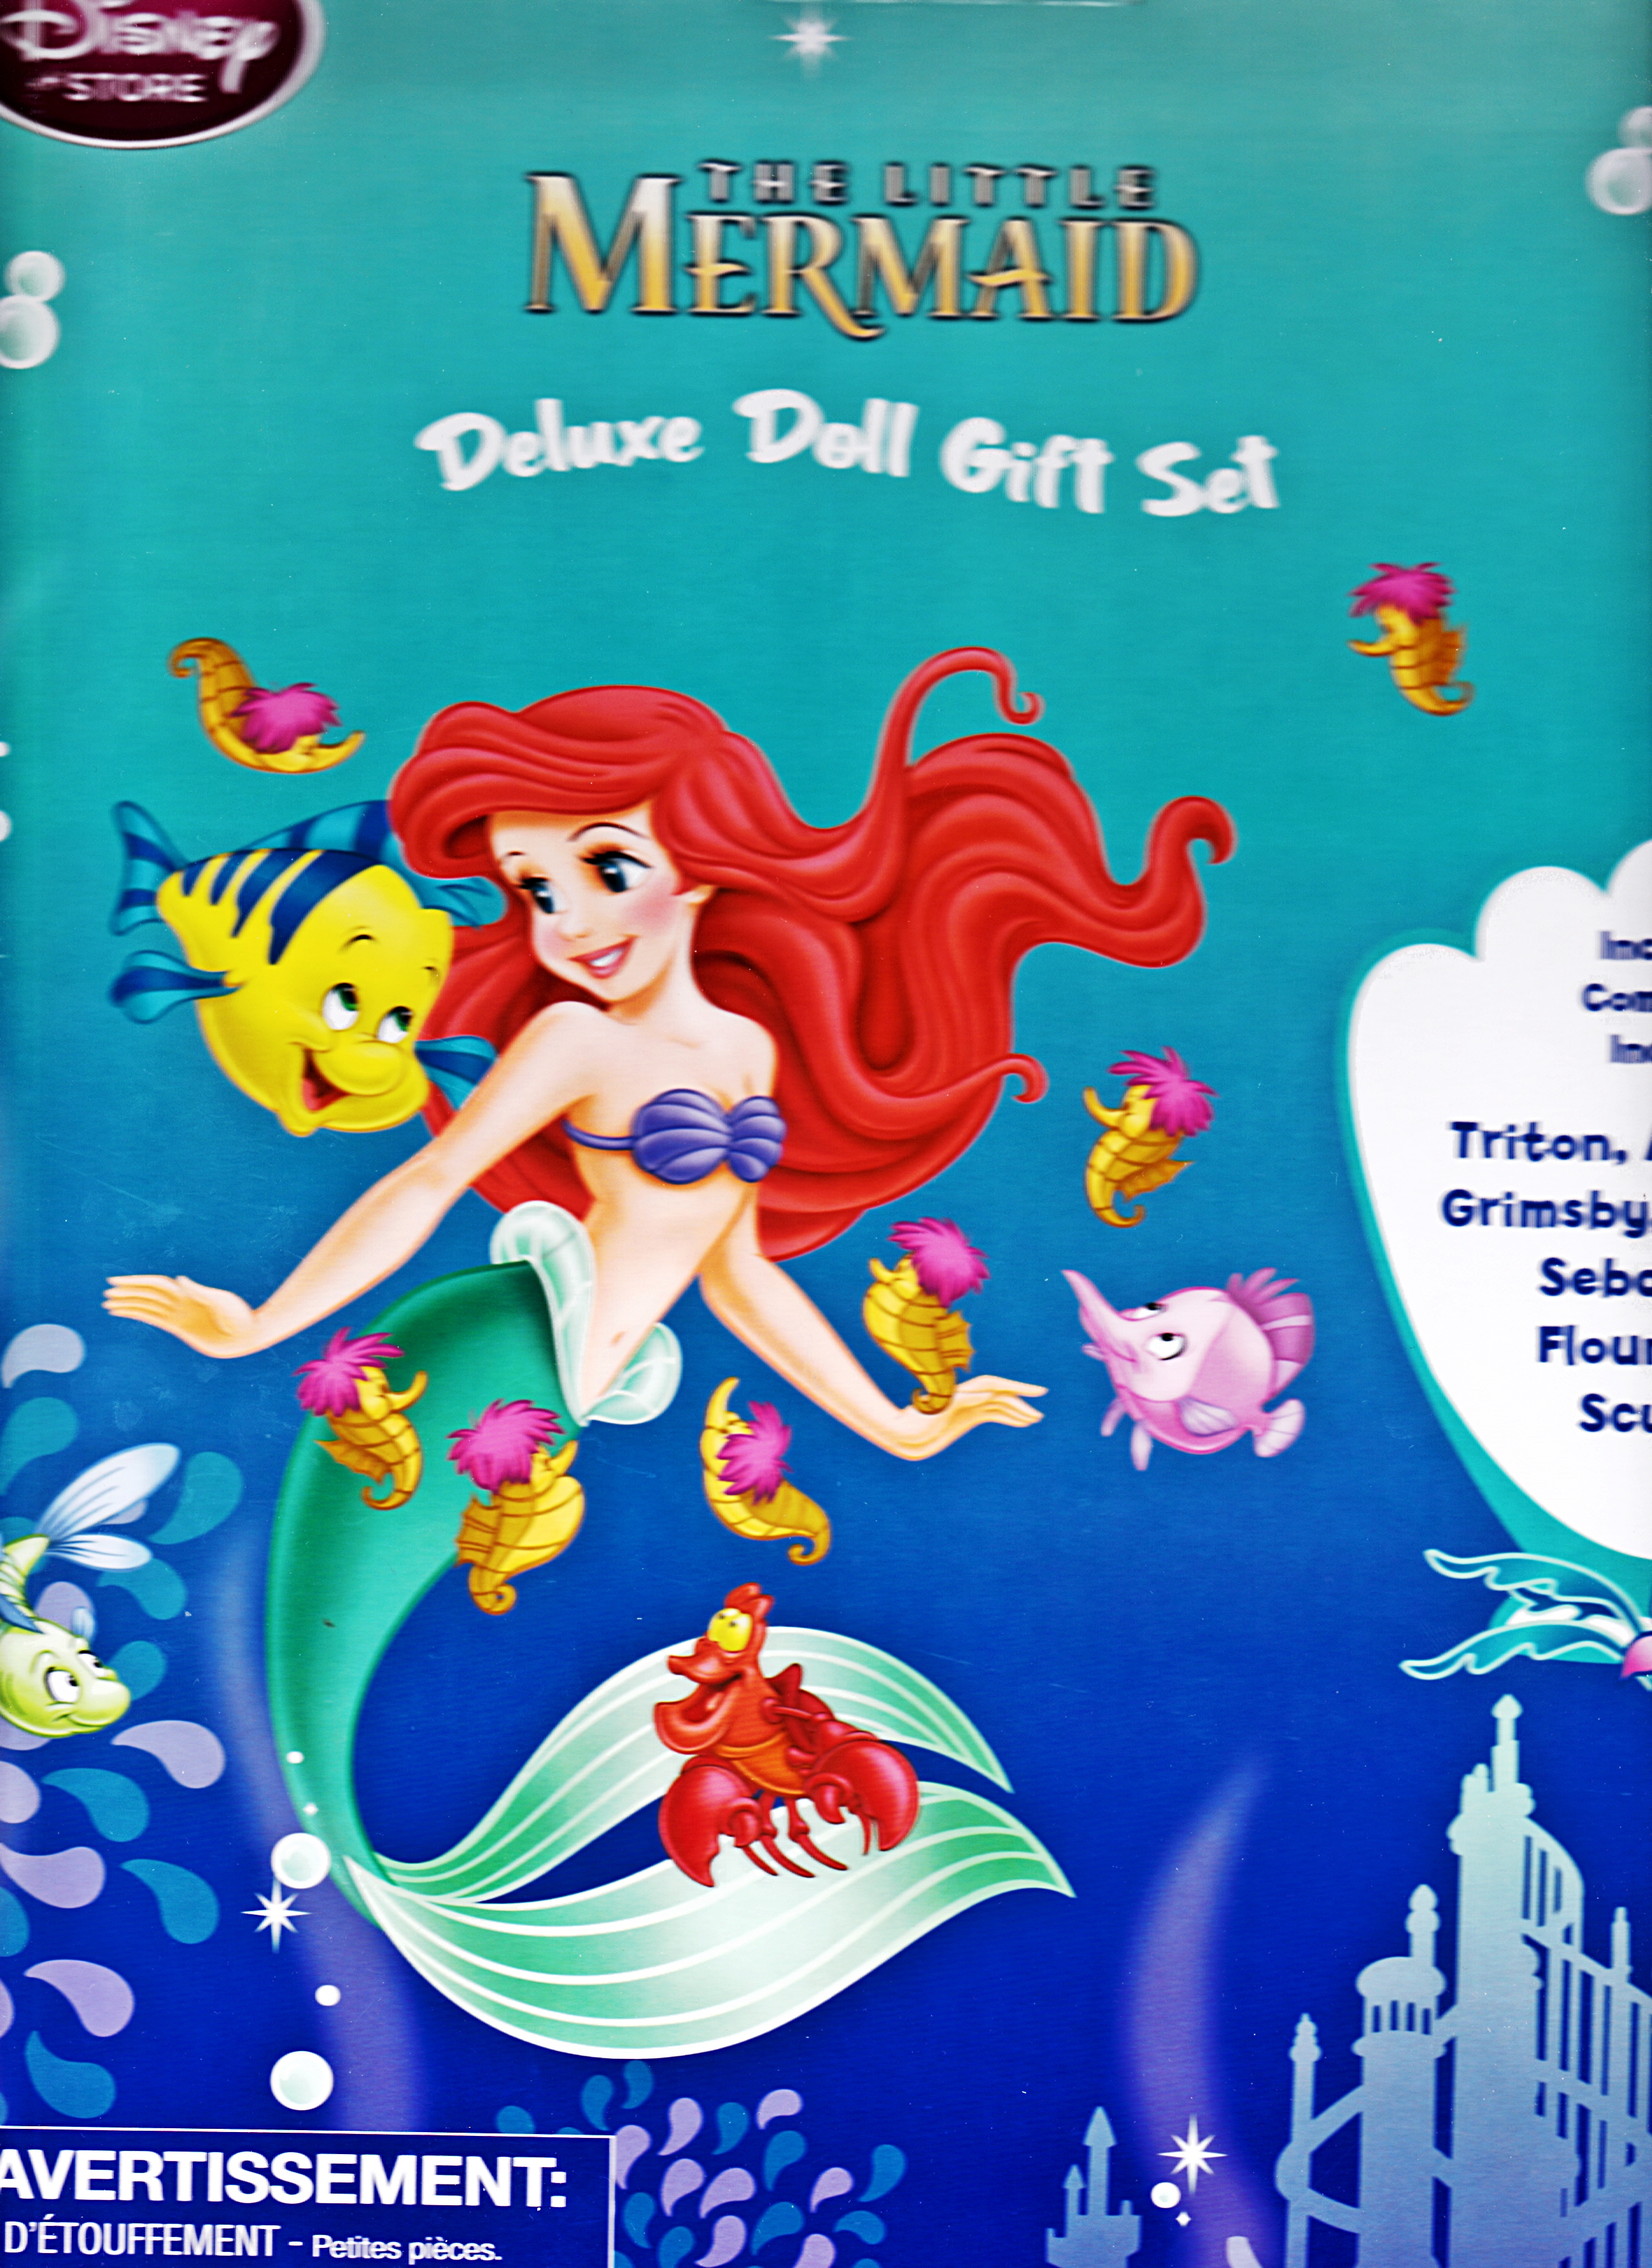  Disney Store - The Little Mermaid: Deluxe Doll Gift Set